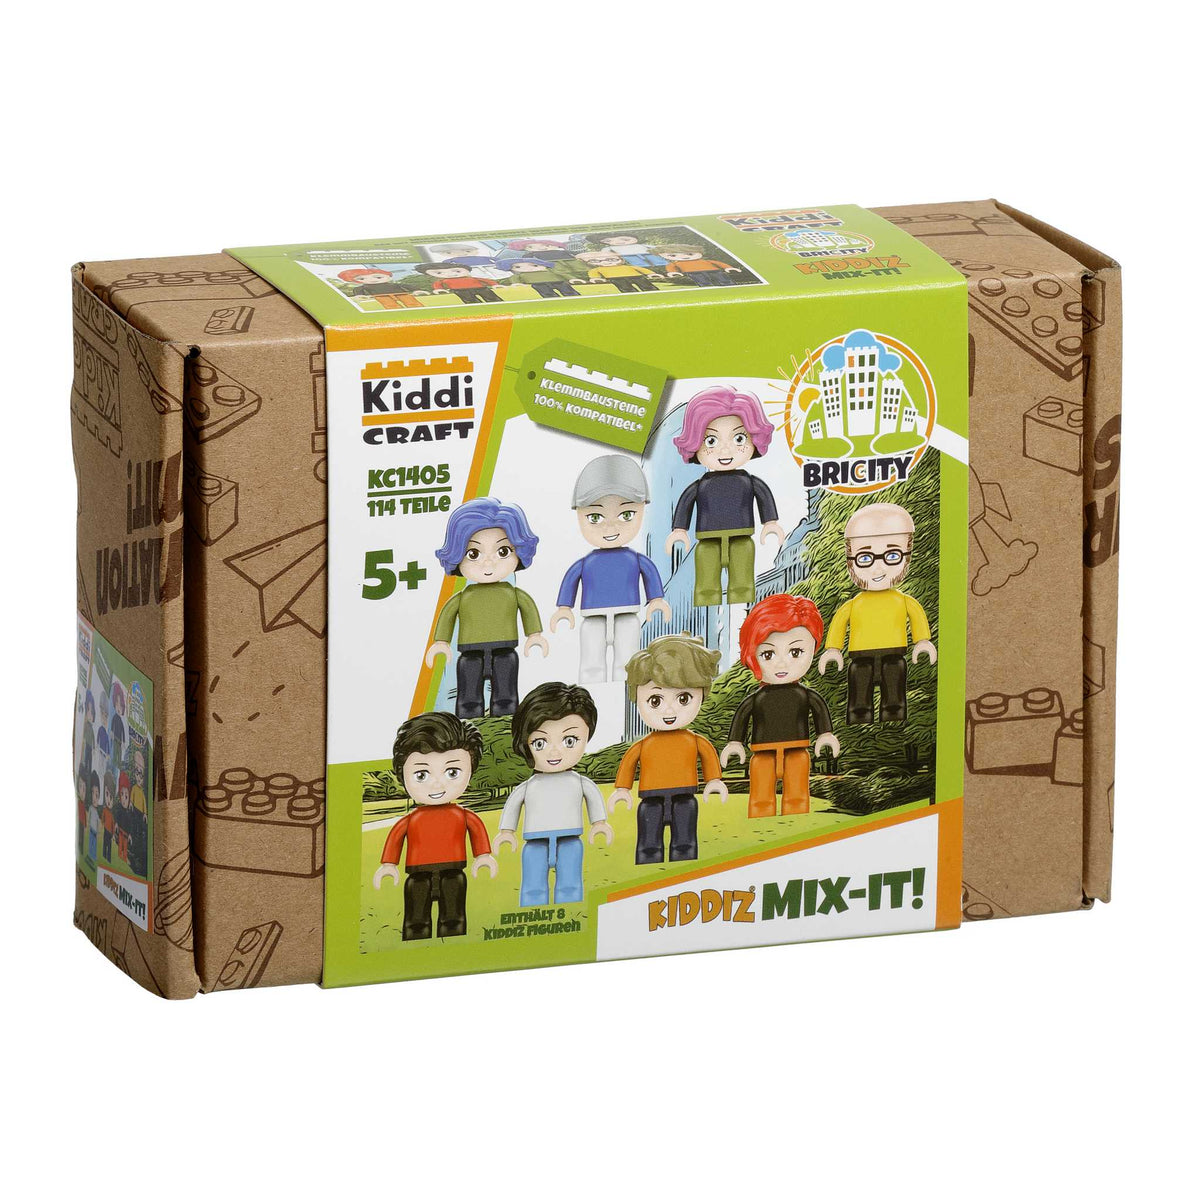 1405 - Figuren Kiddiz MIX-IT (Kiddicraft)